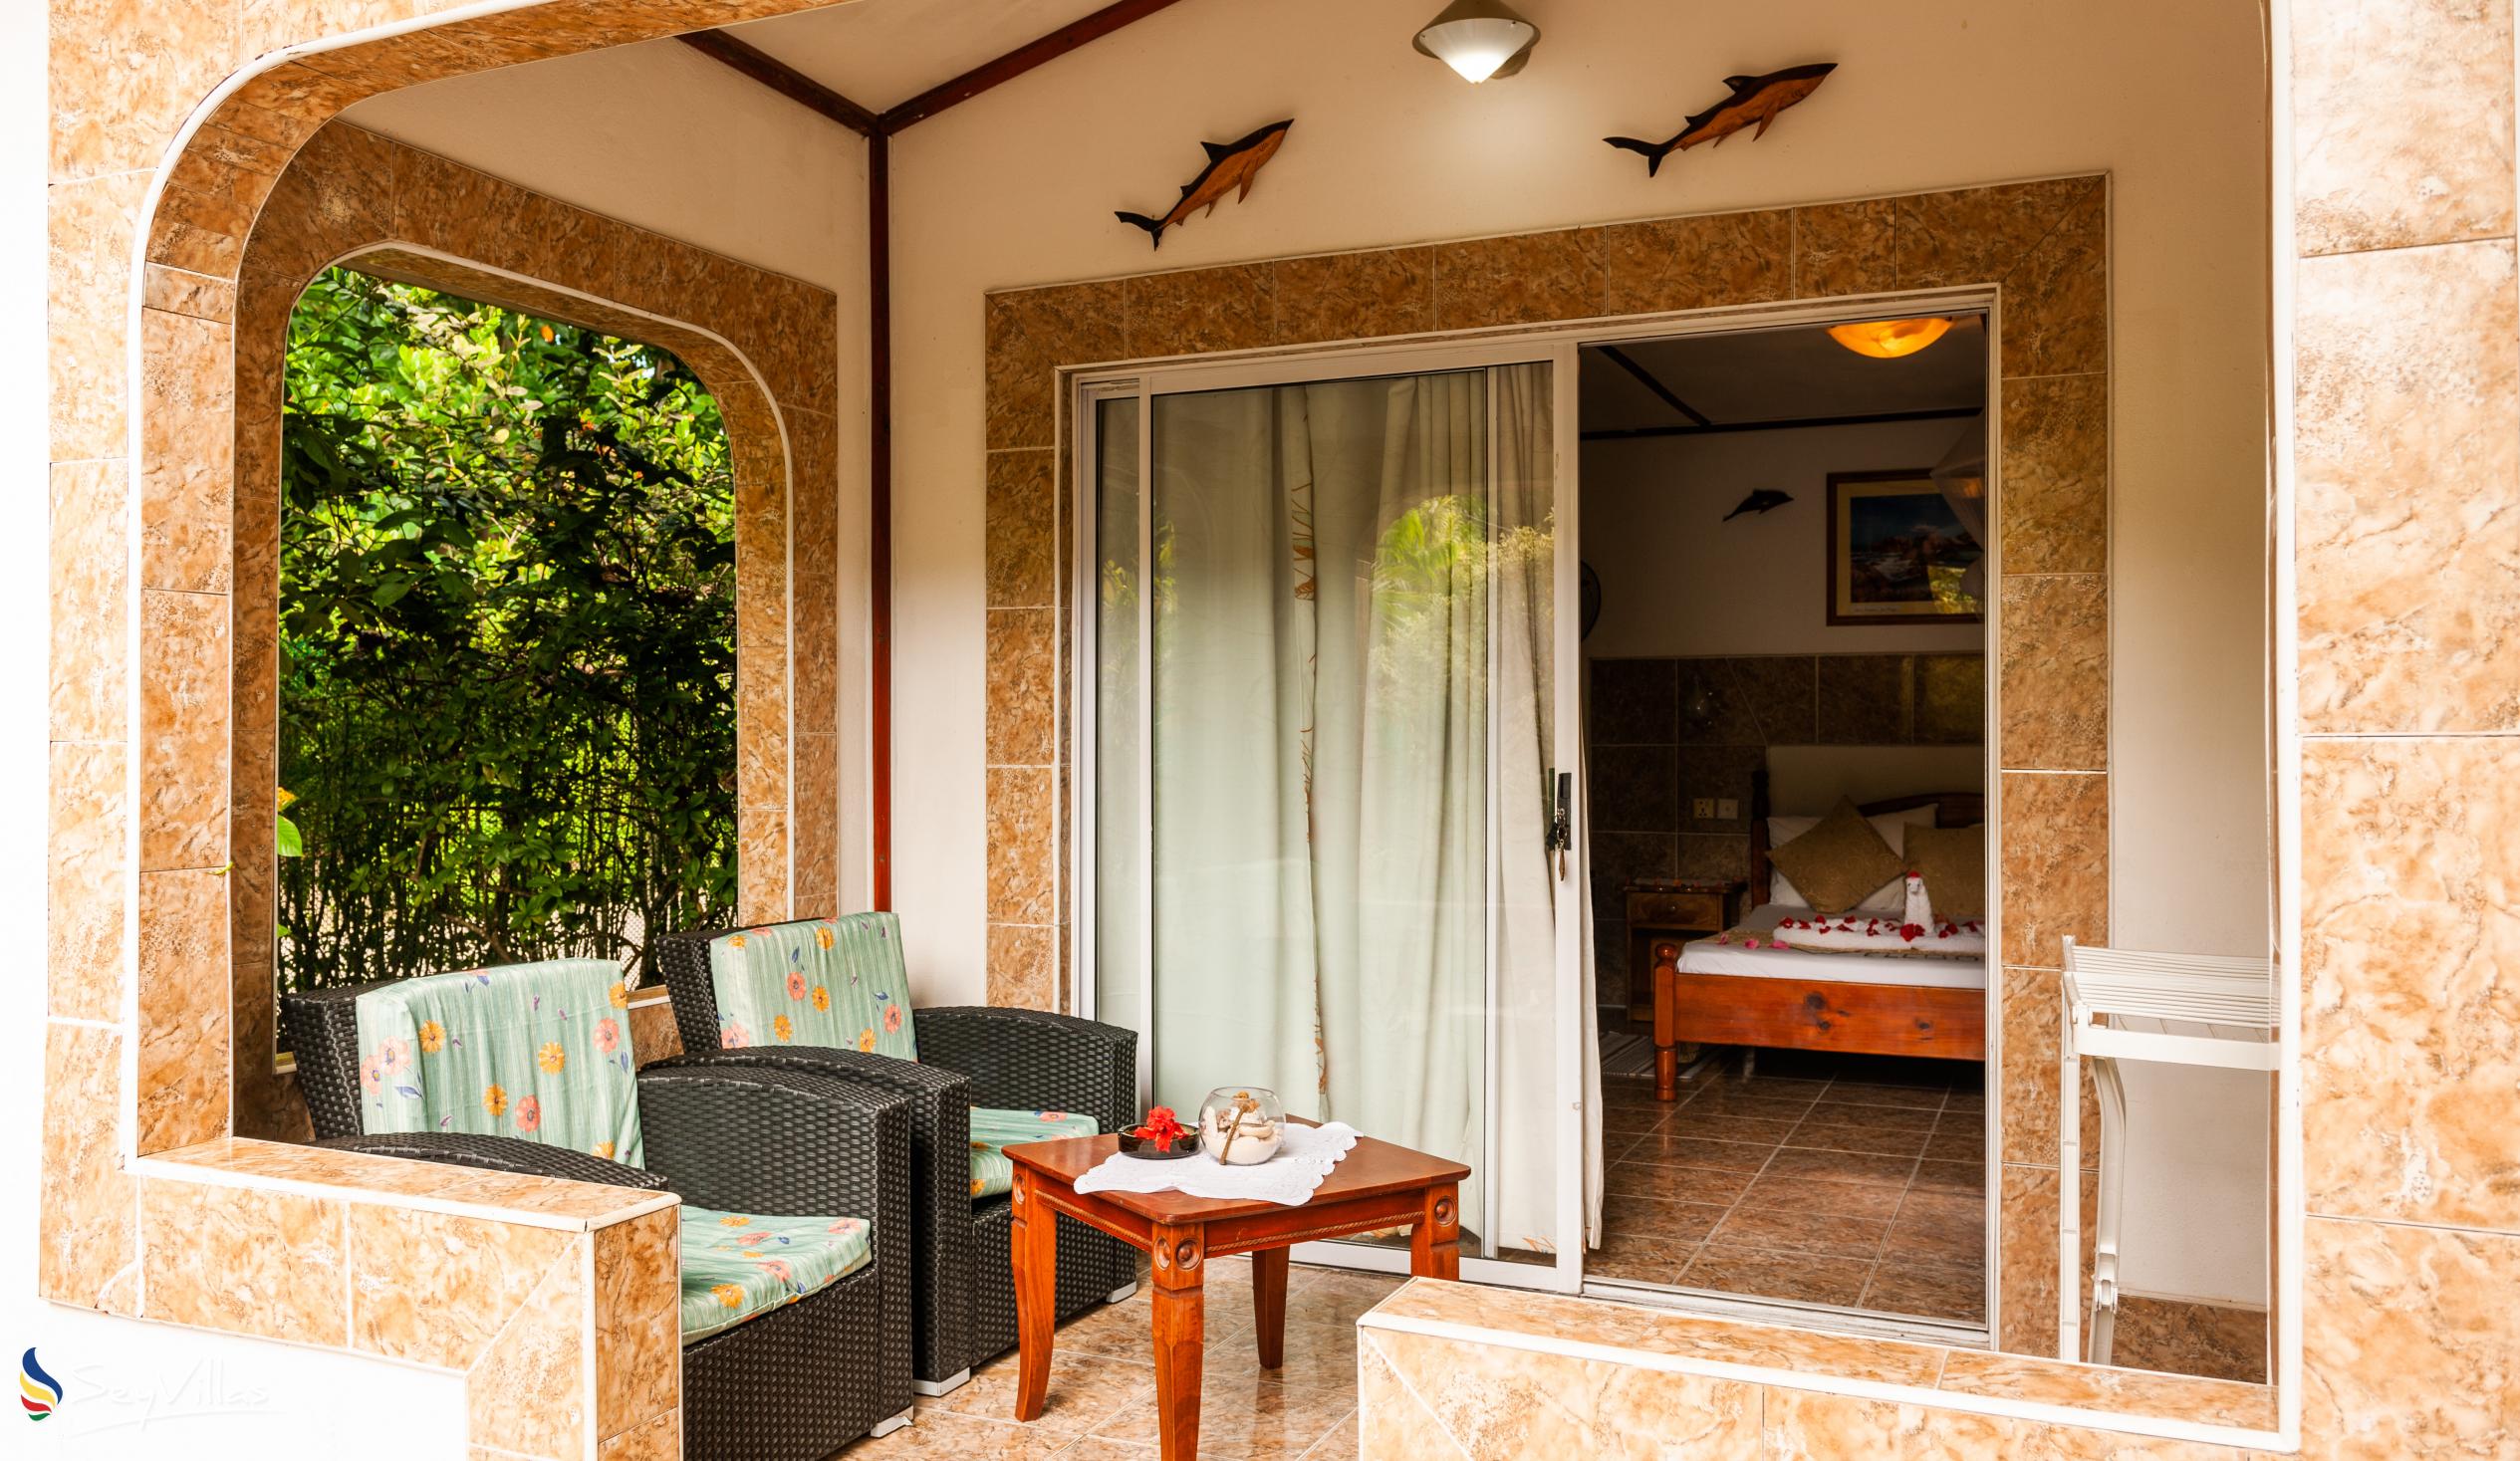 Photo 97: Rising Sun Guesthouse - Standard Room - La Digue (Seychelles)